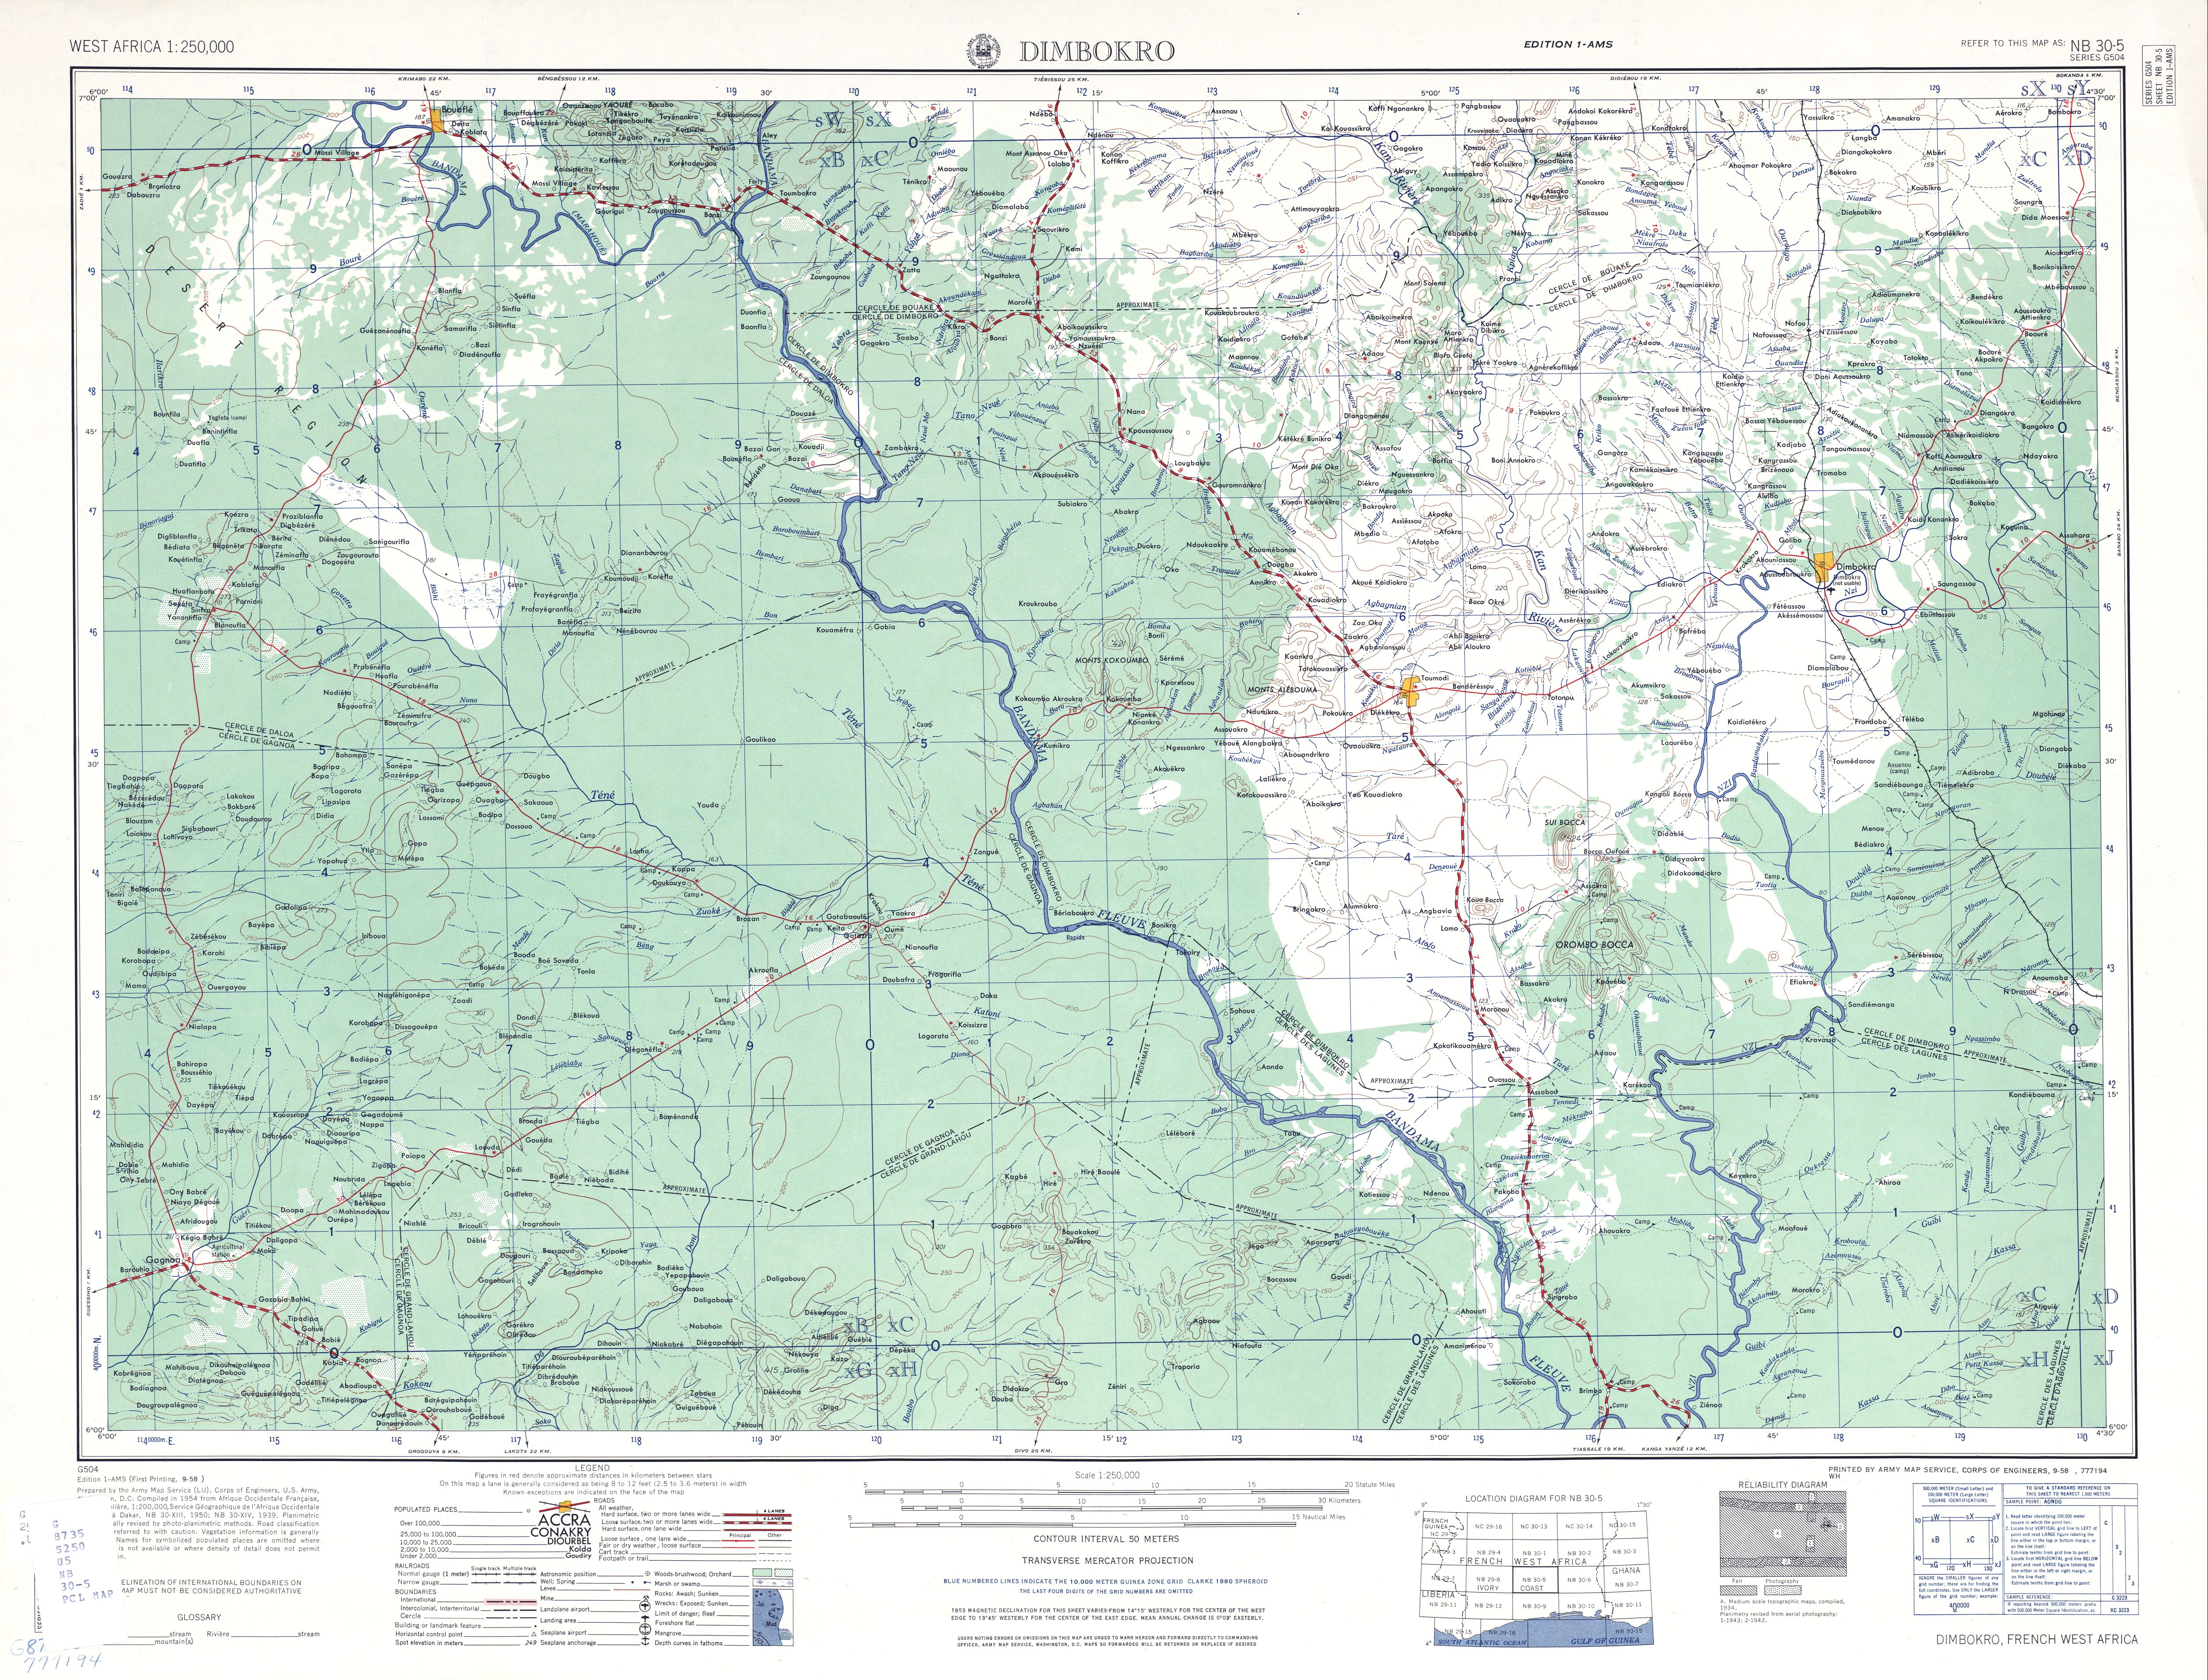 Hoja Dimbokro del Mapa Topográfico de África Occidental 1955